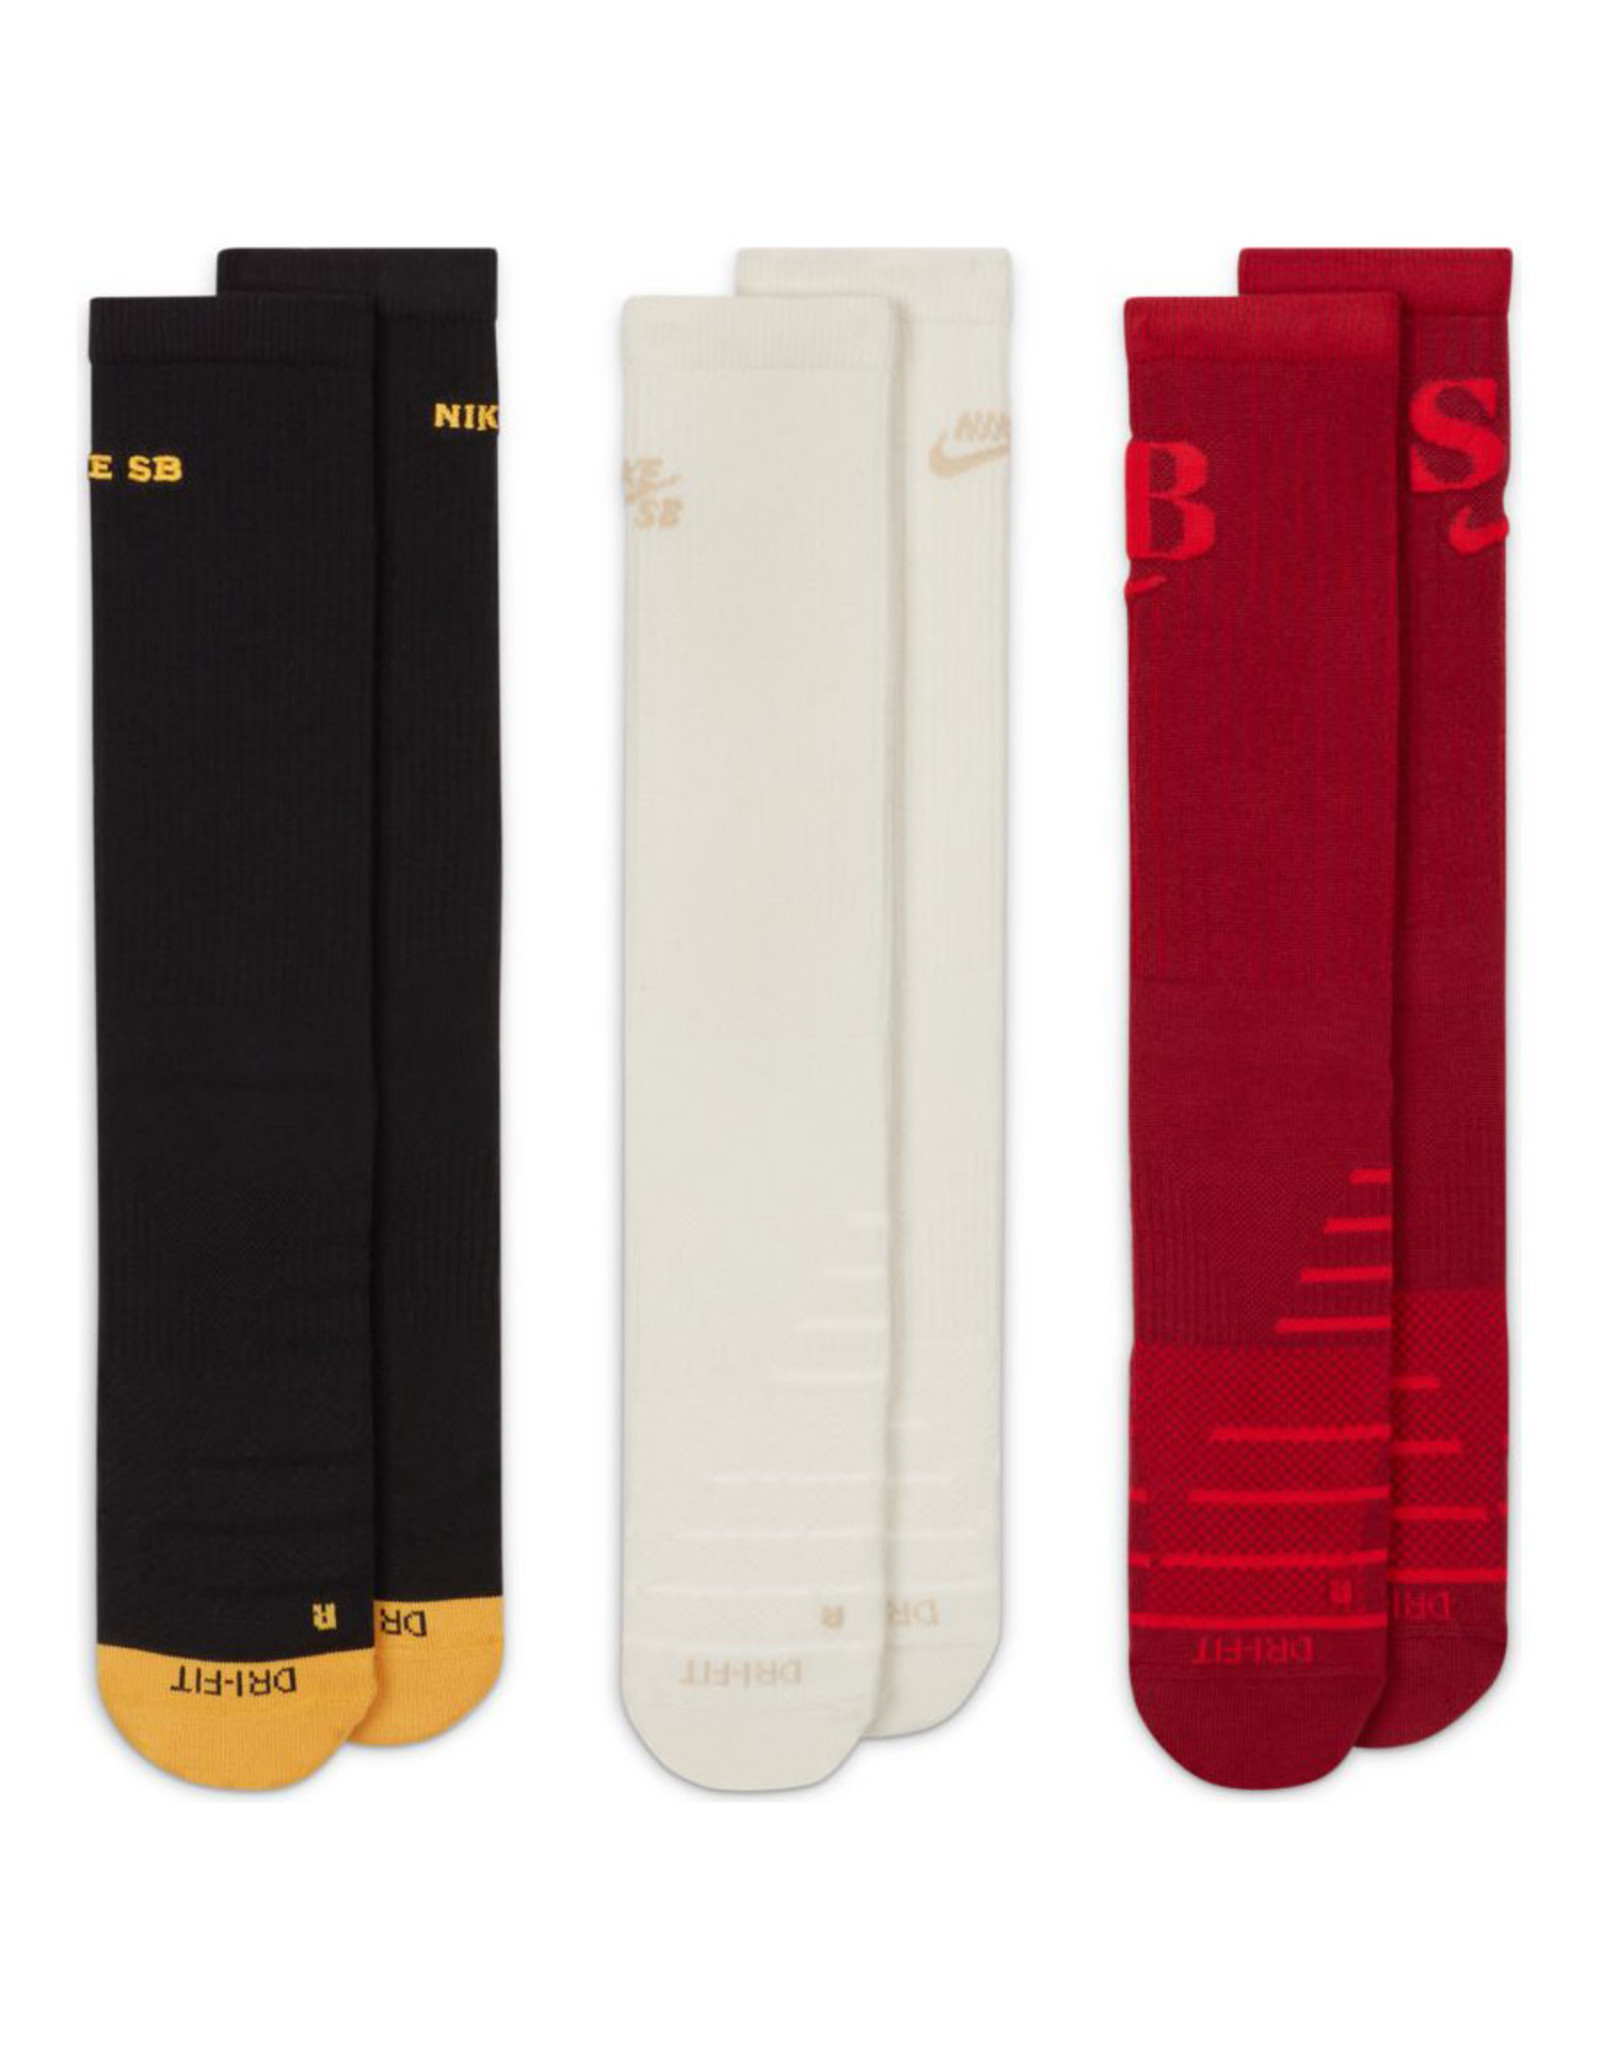 Nike SB Nike SB Socks Everyday Max Lightweight Black/White/Red (3-Pack)